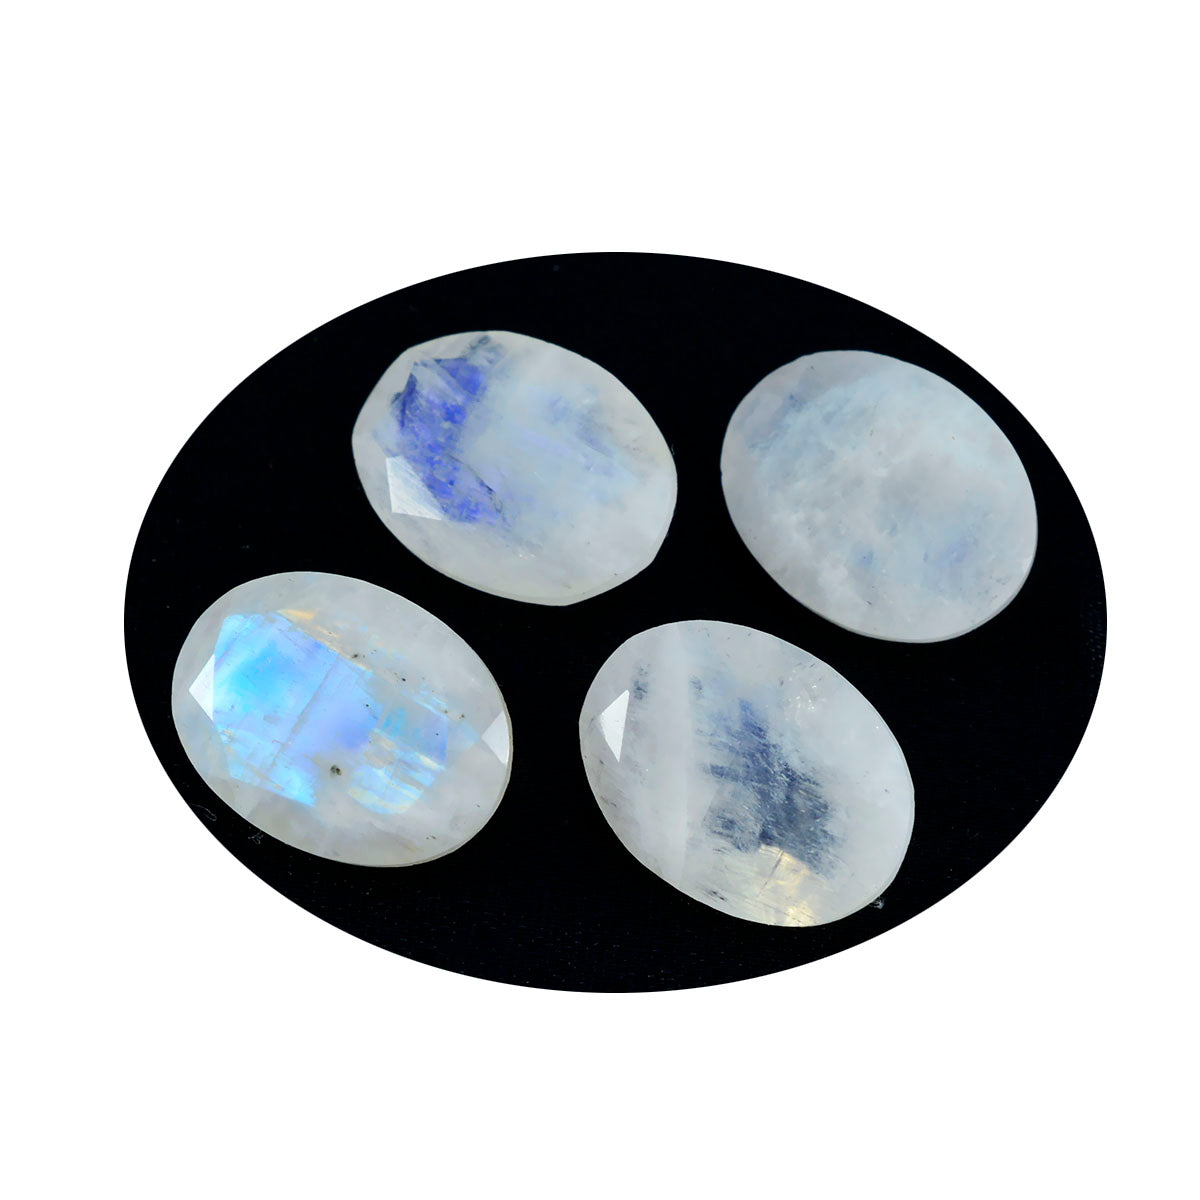 Riyogems 1PC White Rainbow Moonstone Faceted 8x10 mm Oval Shape A1 Quality Stone